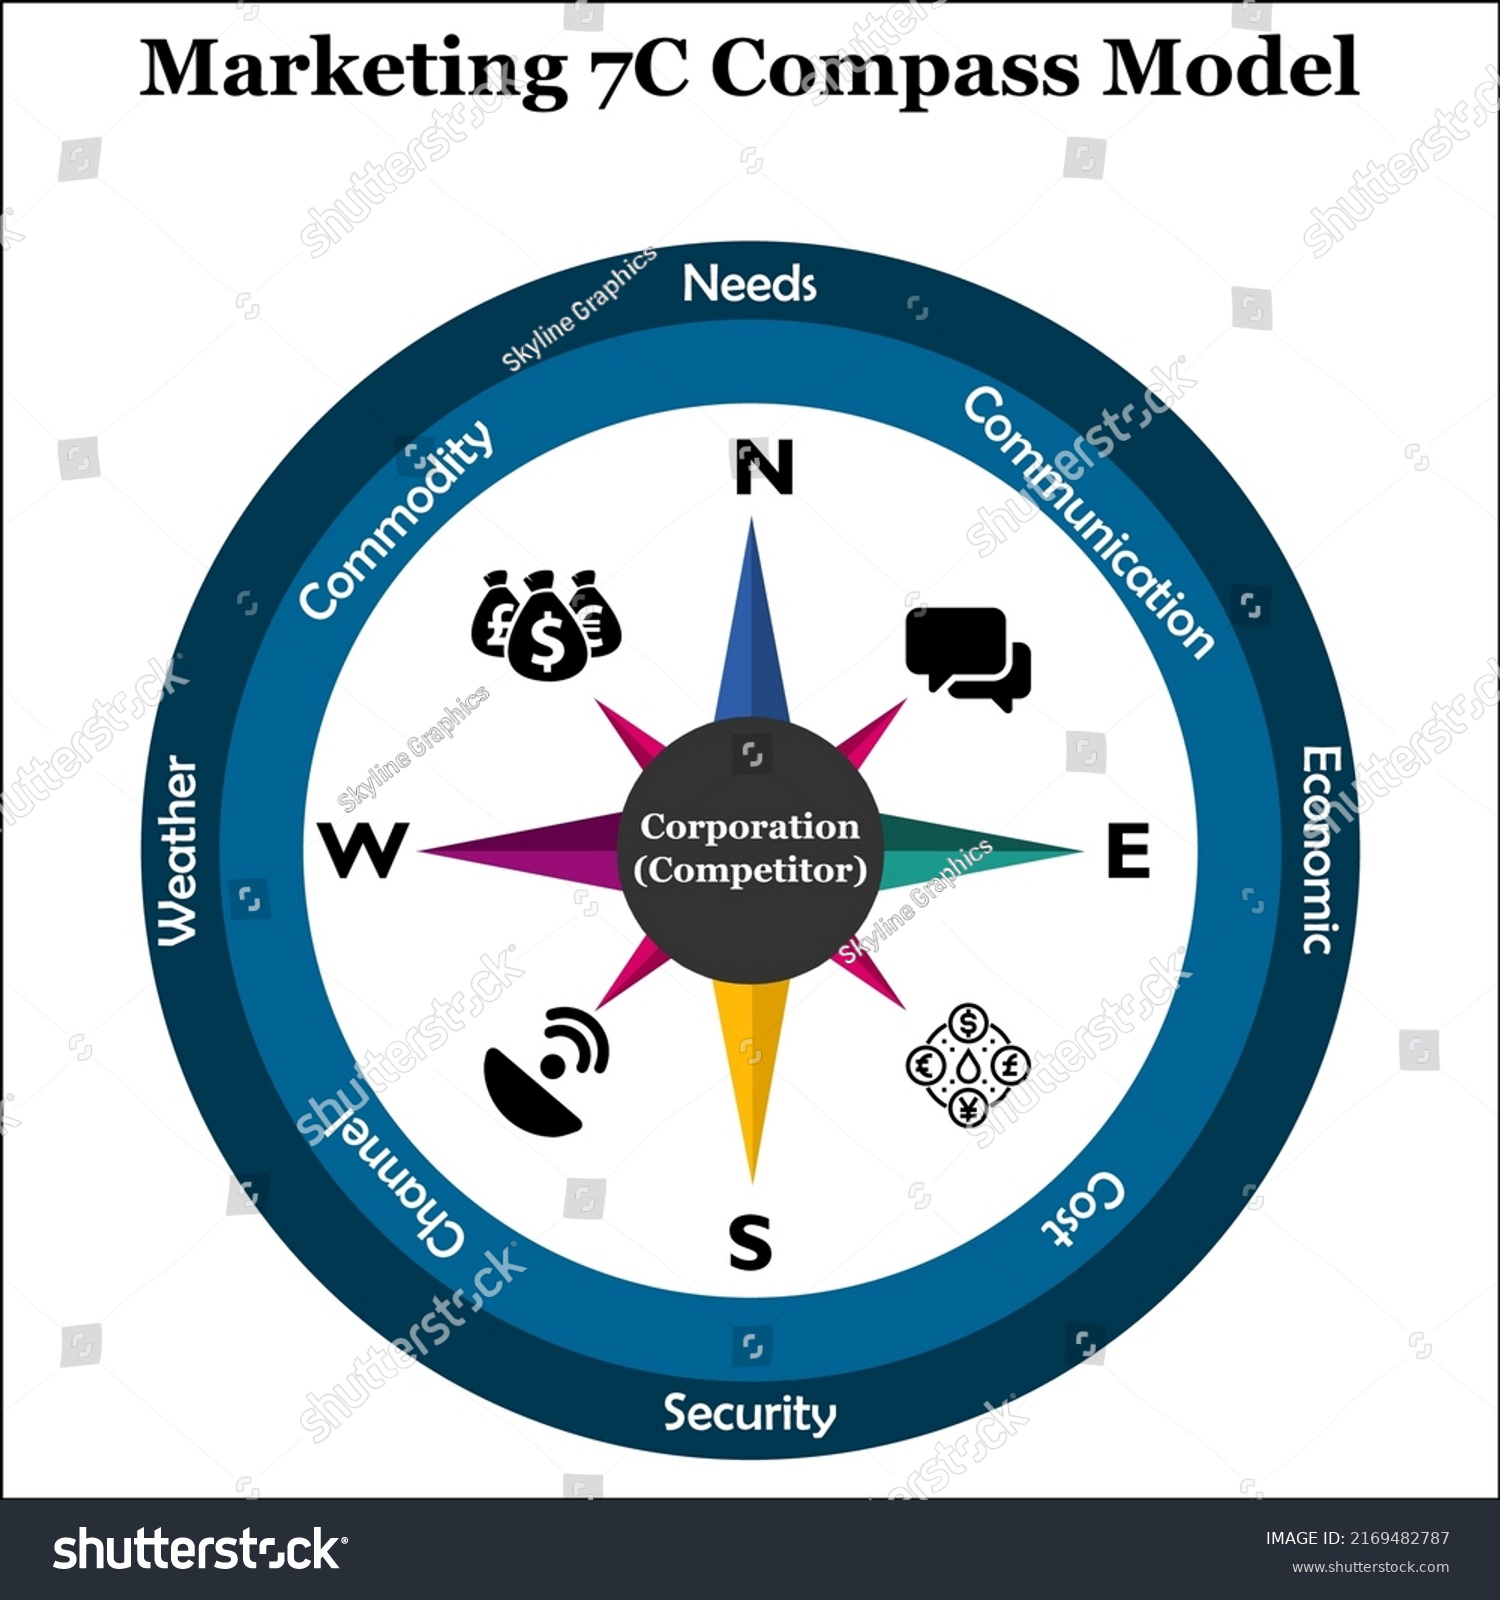 7Cs COMPASS MODEL